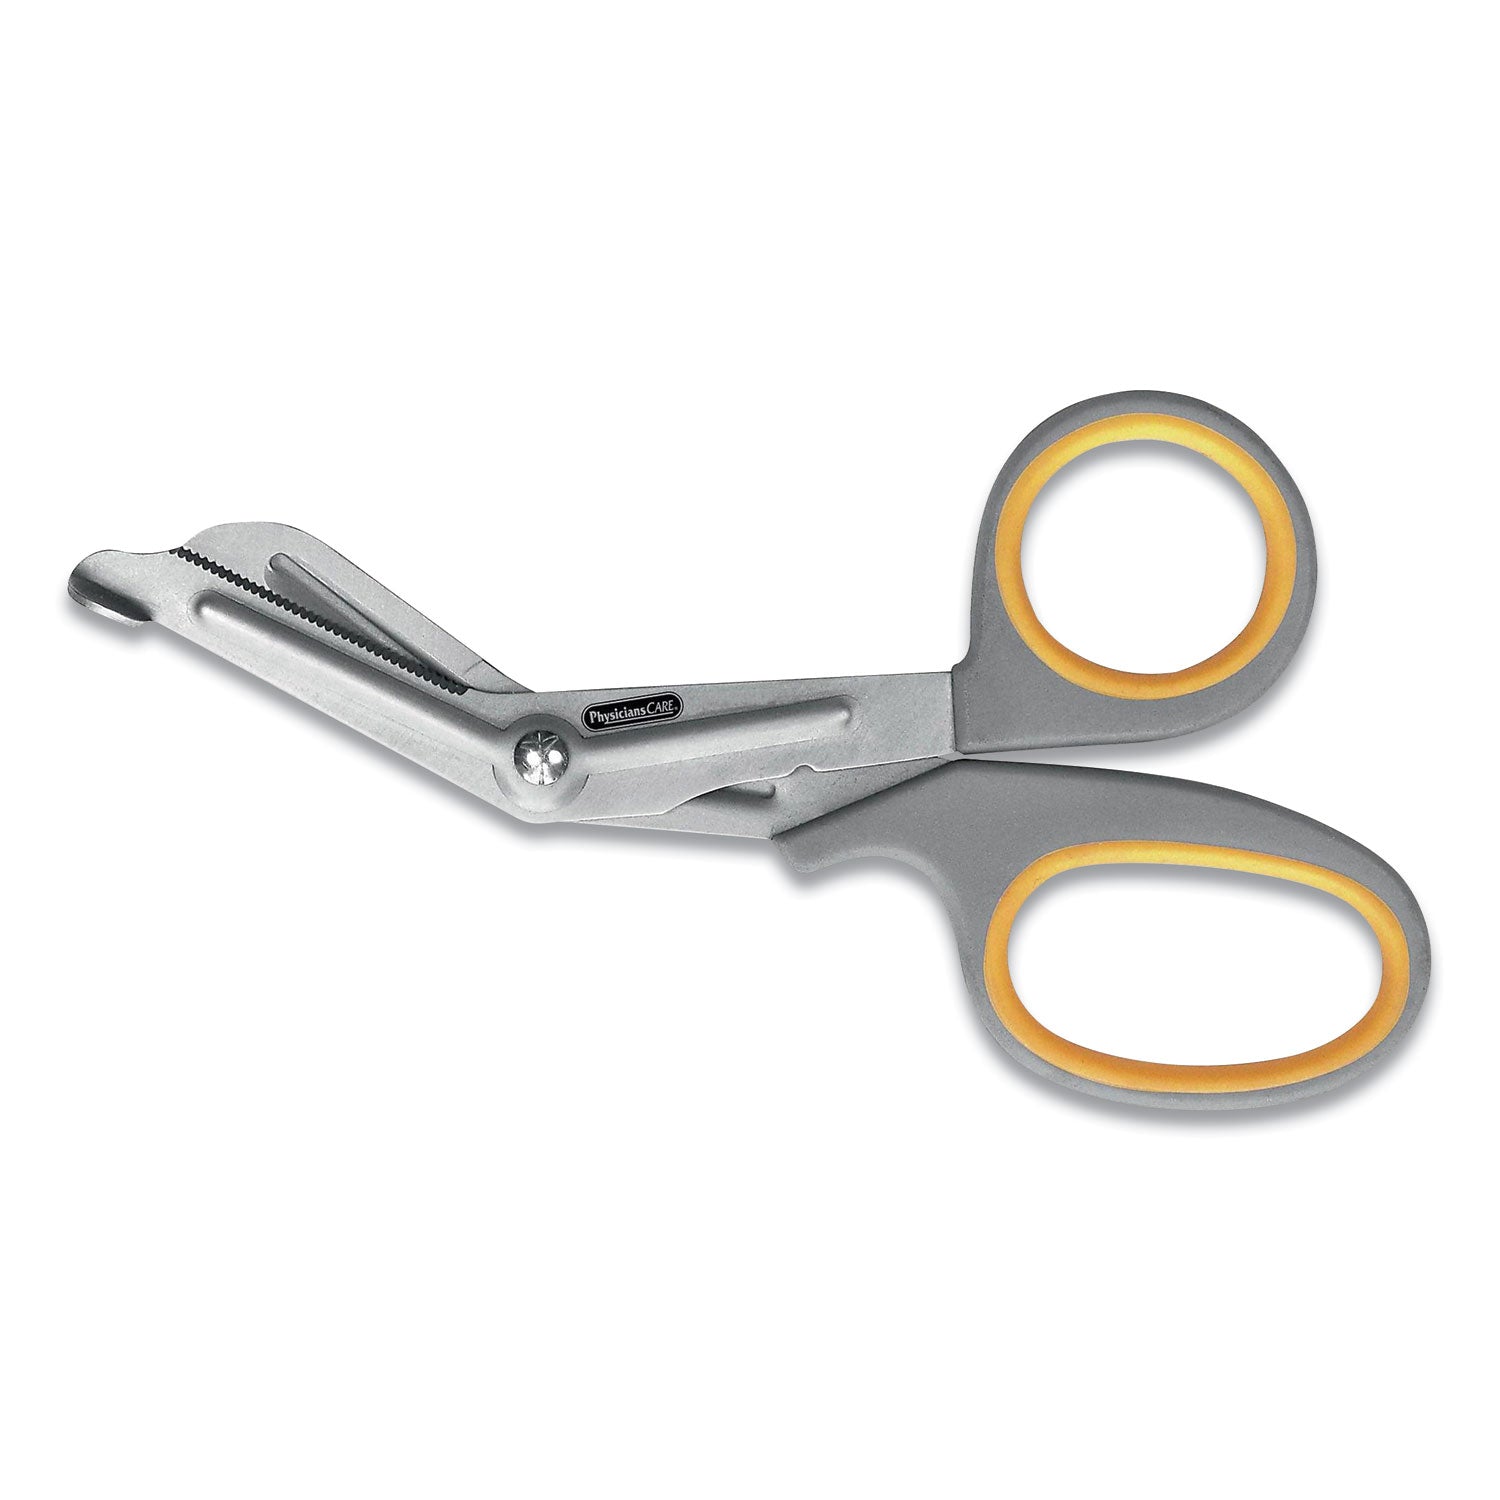 titanium-bonded-angled-medical-shears-7-long-3-cut-length-gray-yellow-offset-handle_fao90292 - 1